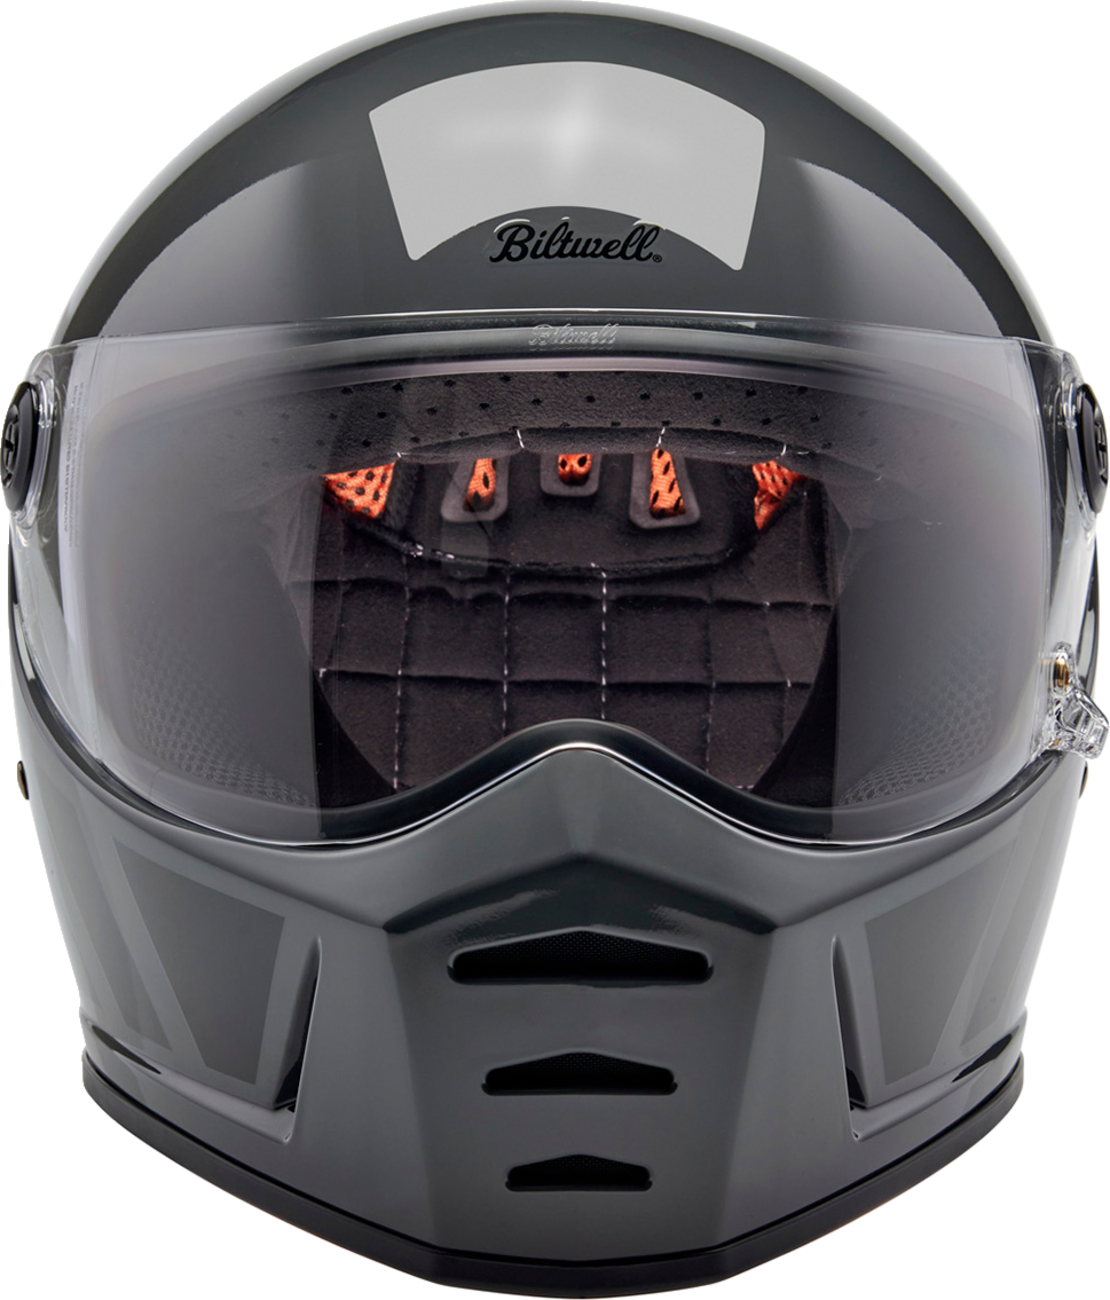 BILTWELL Lane Splitter Helmet - Storm Gray Inertia - Large 1004-569-504